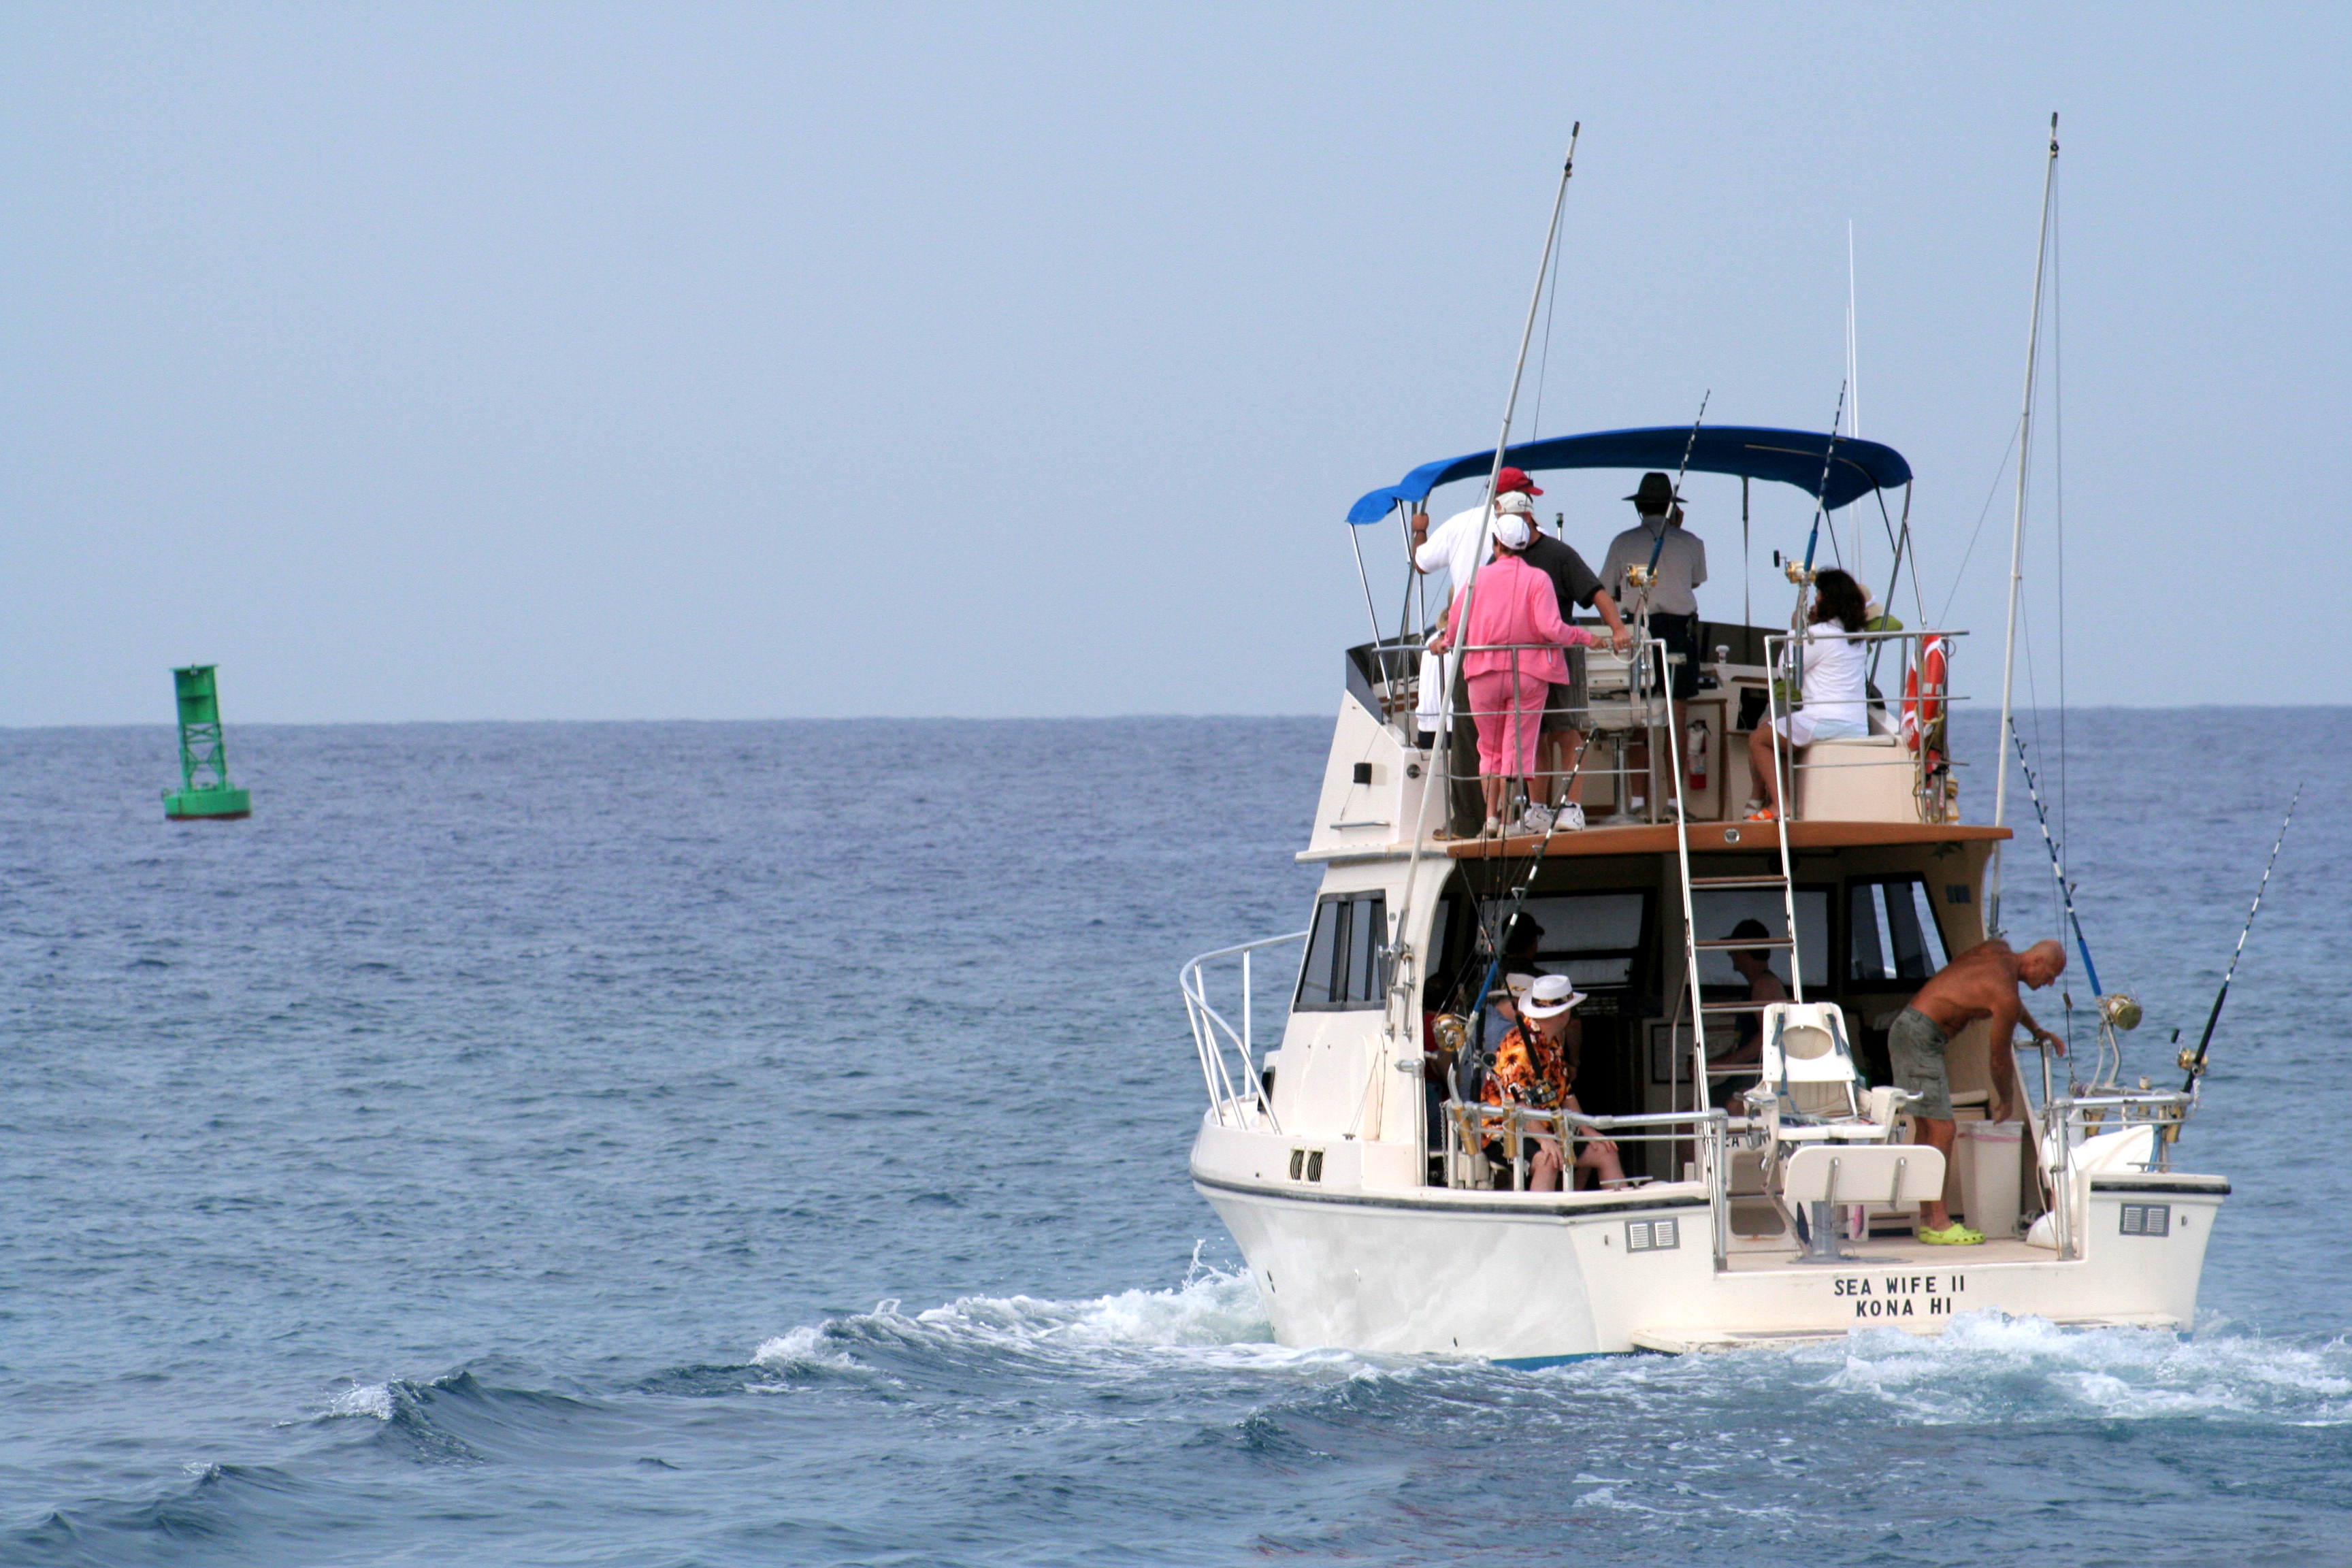 File:Charter fishing boat in Hawaii.jpg - Wikimedia Commons